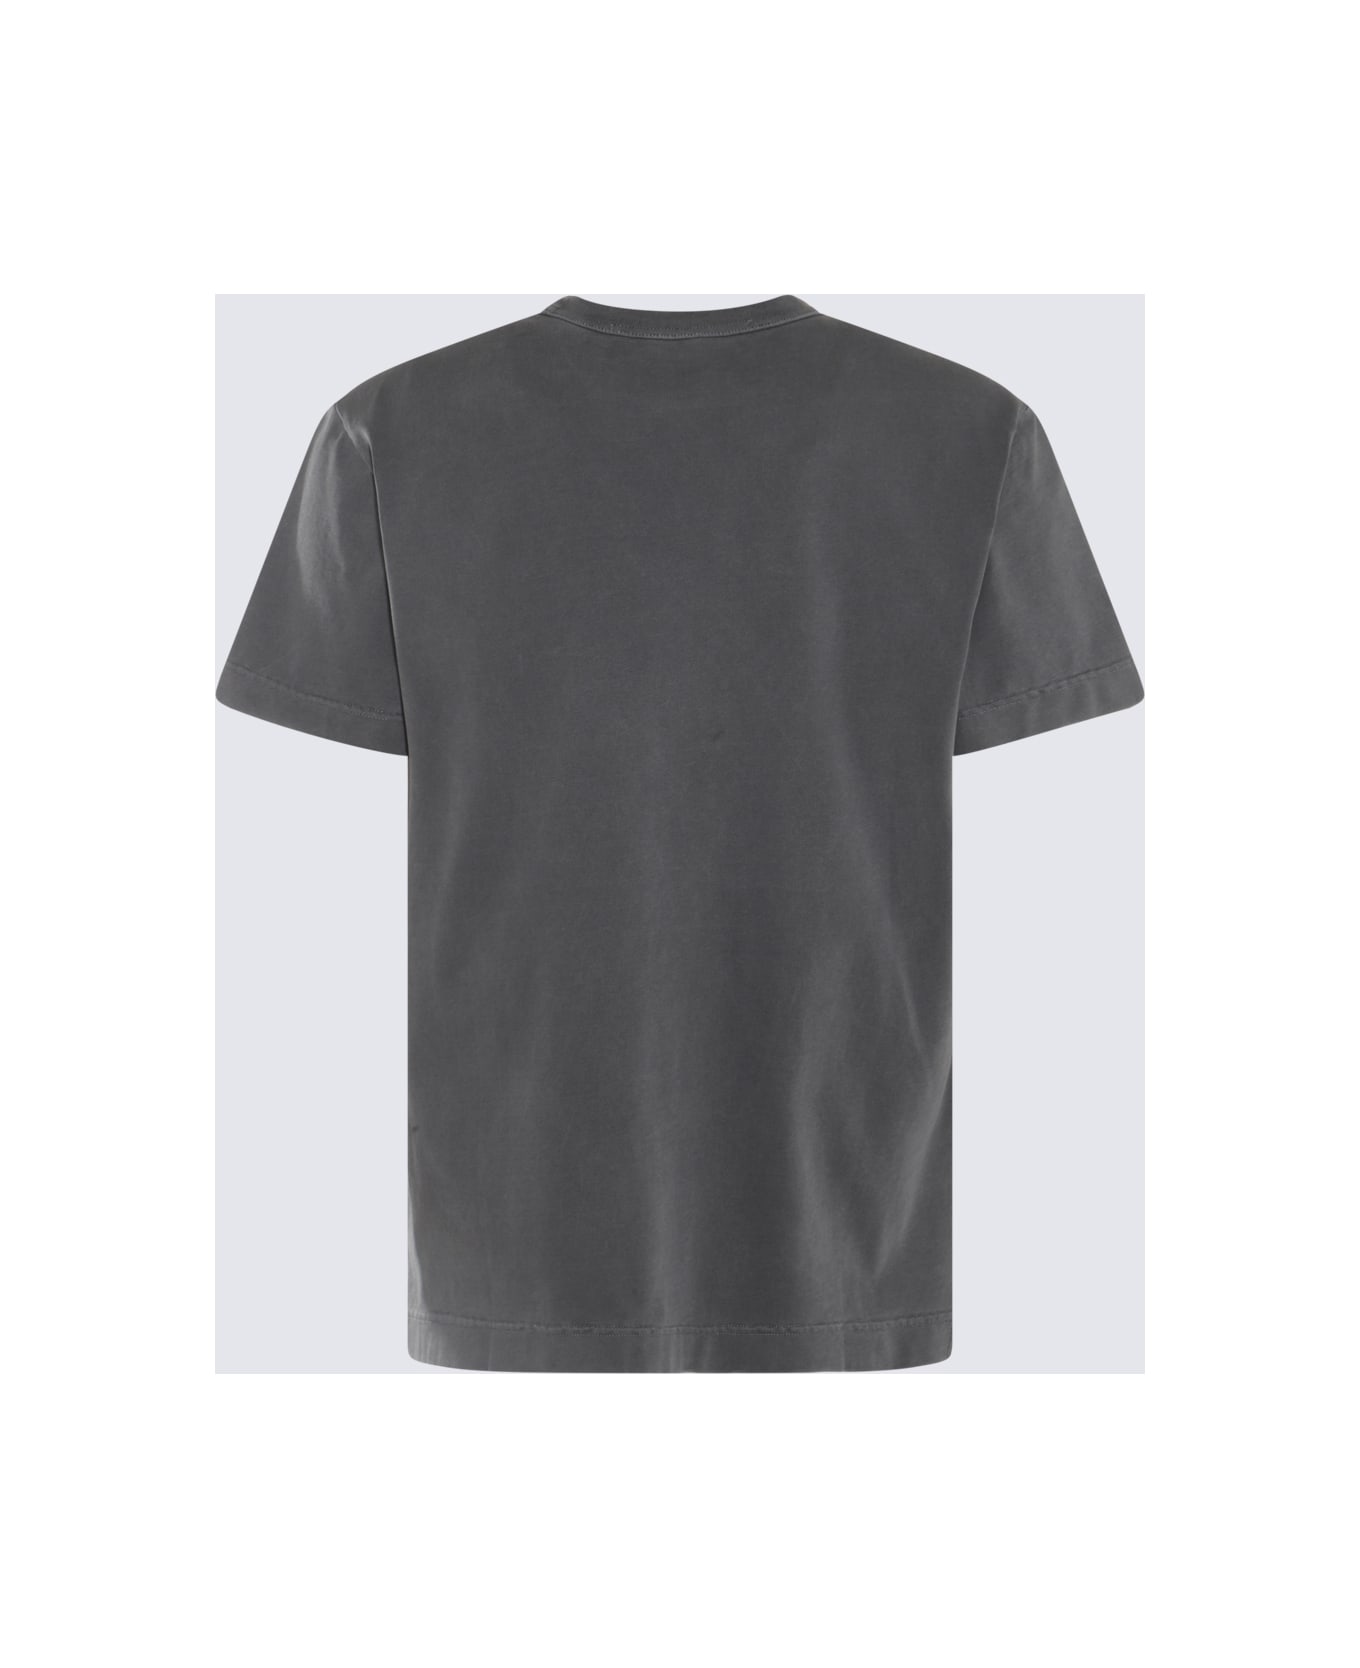 Alexander Wang Grey Cotton T-shirt - WASHED BLACK Tシャツ